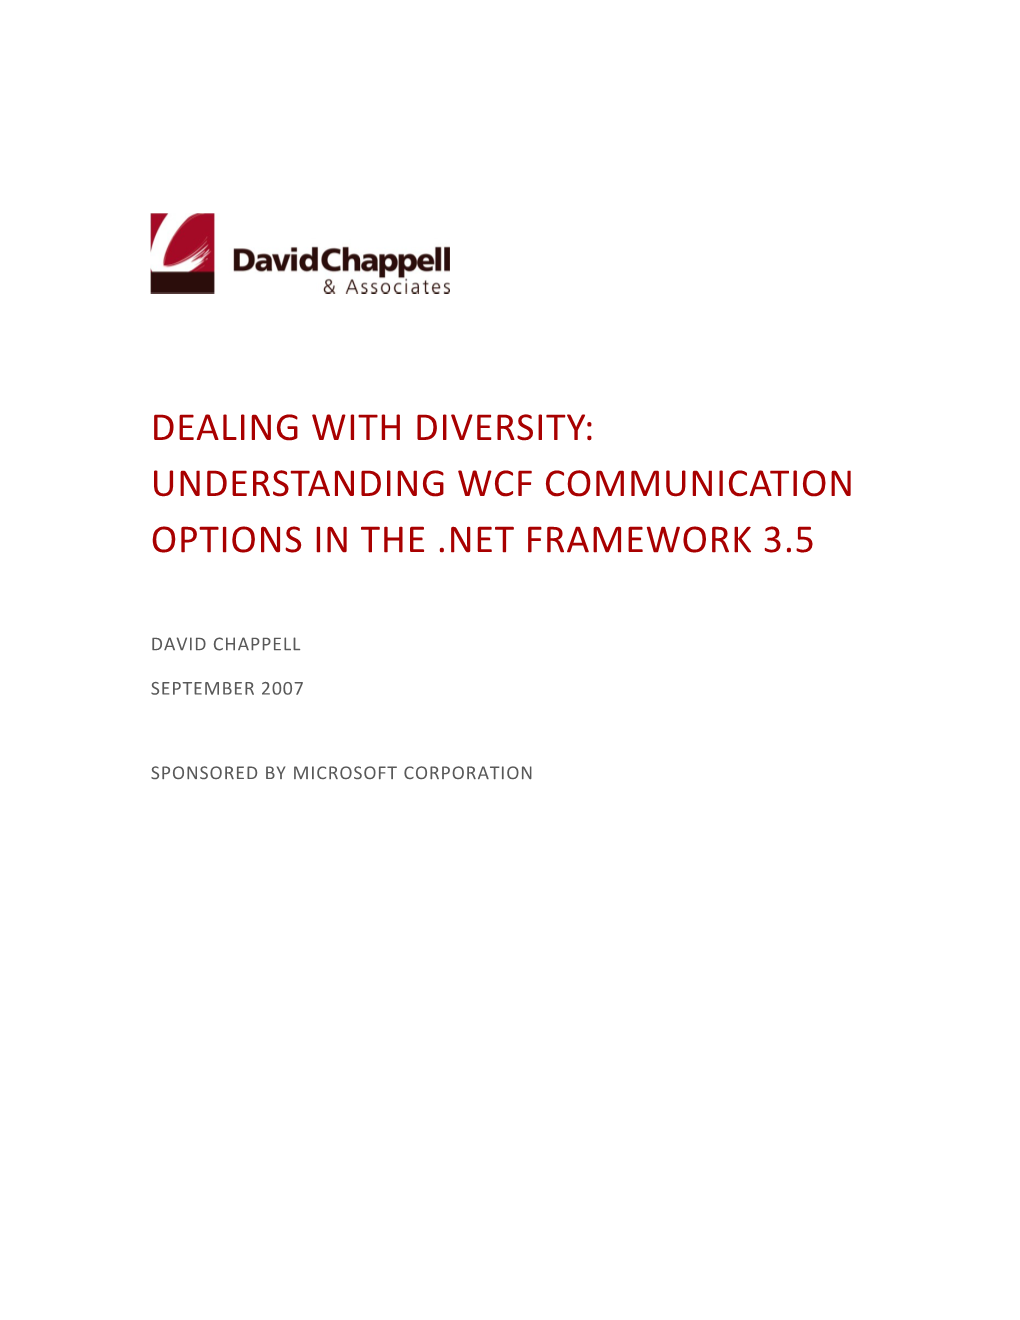 Dealing with Diversity: Understanding WCF Communication Options in the .NET Framework 3.5